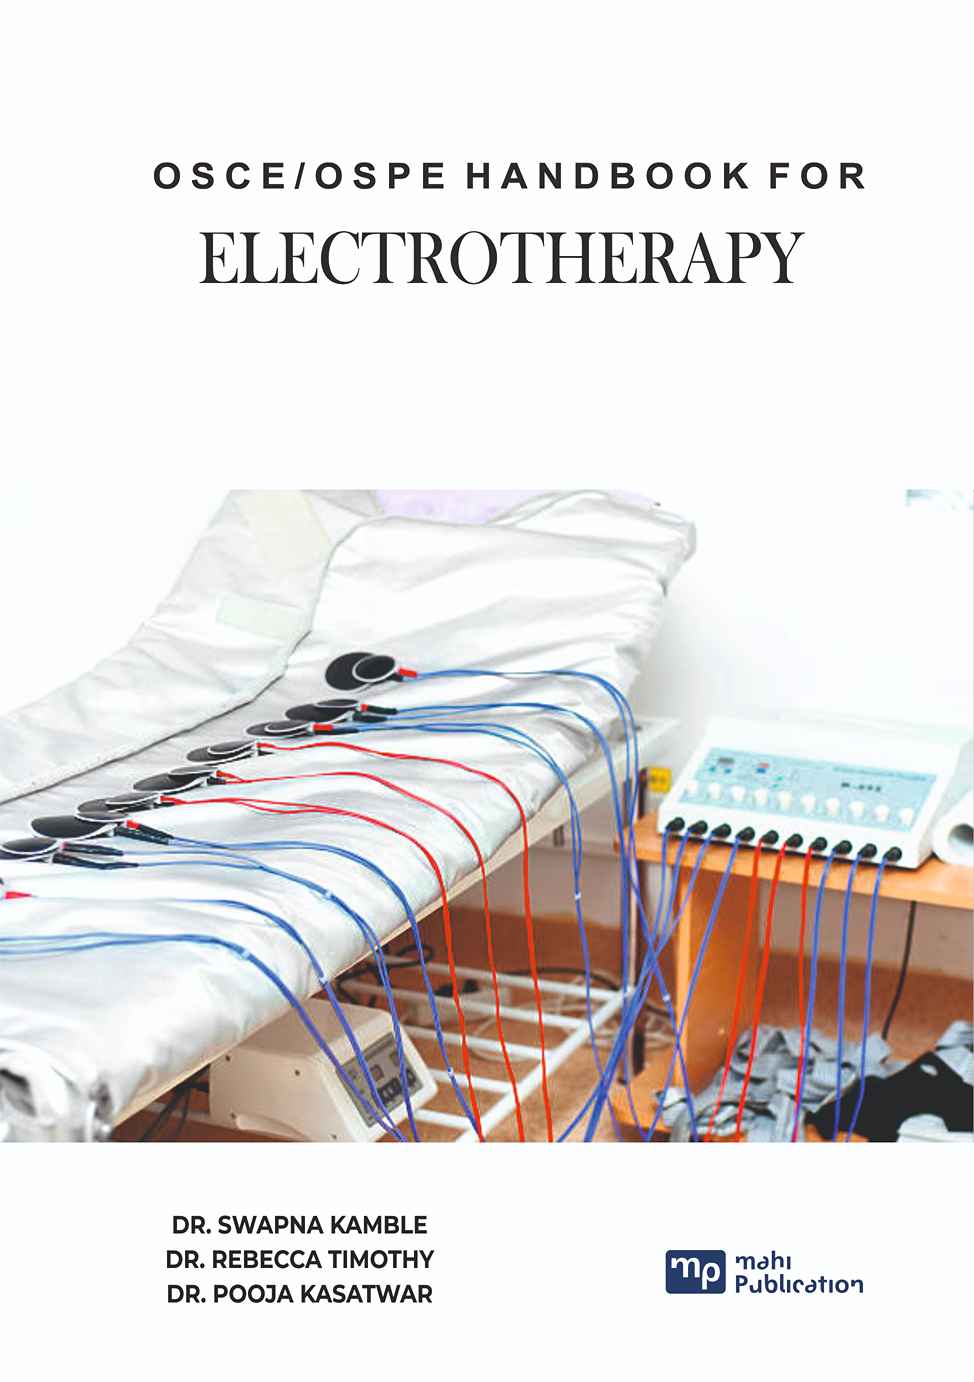 OSCE/OSPE Handbook for Electrotherapy